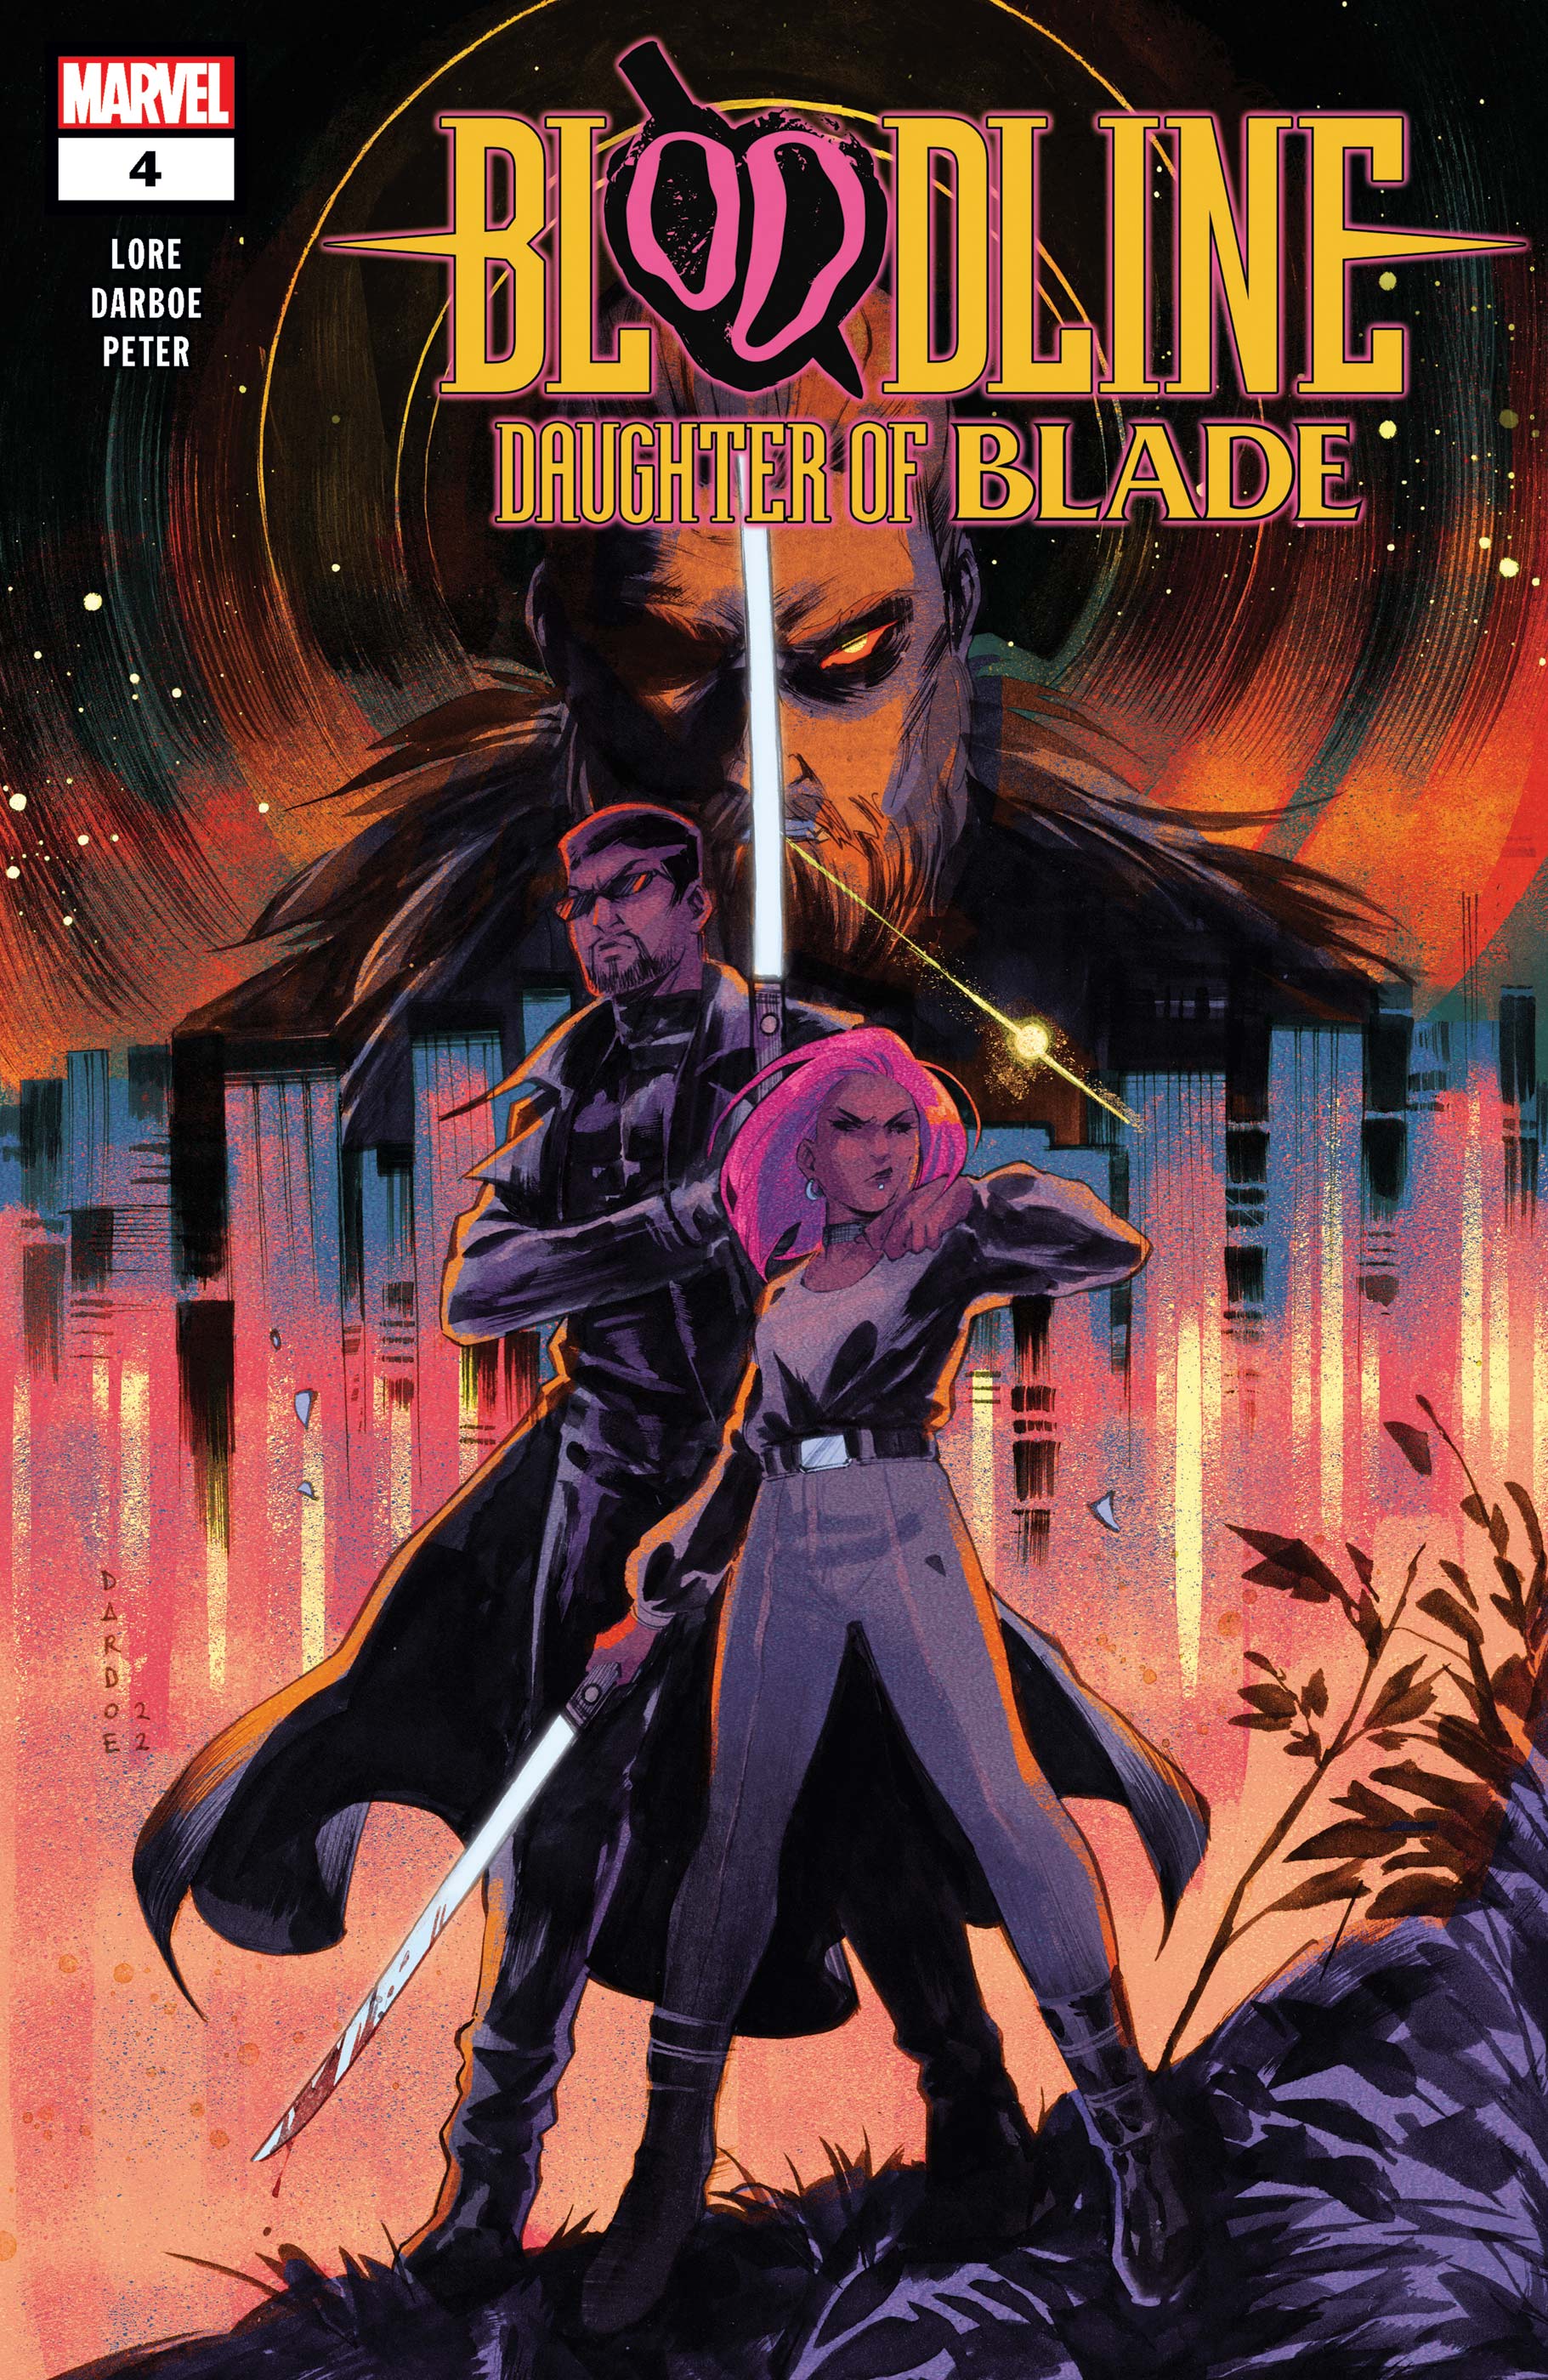 Bloodline: Daughter of Blade (2023) #4